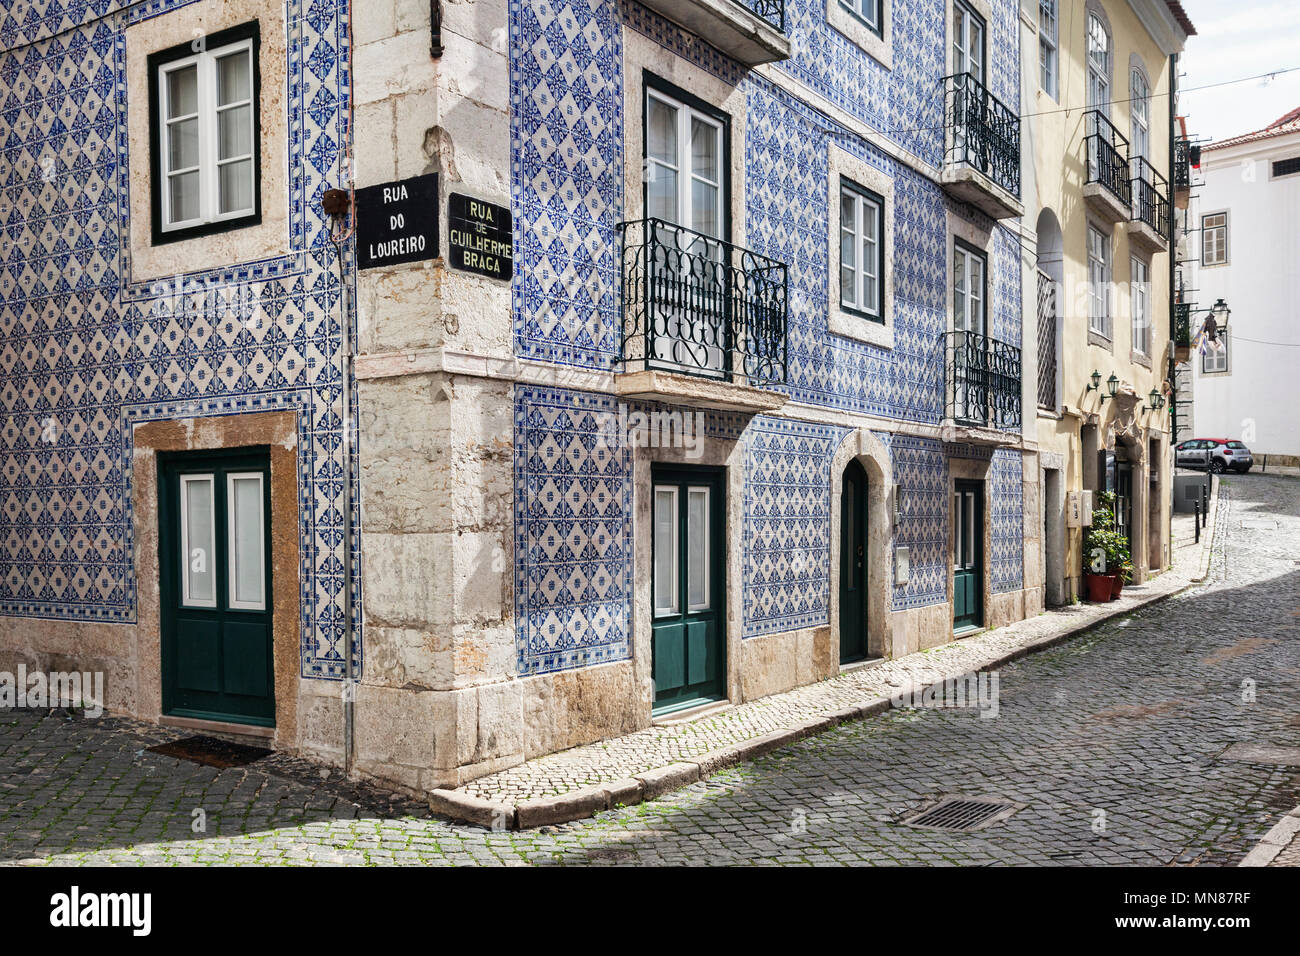 7 March 2018: Lisbon, Portugal - Traditional ceramic tiled house with wrought iron balconies on the corner of Rua de Loureiro and Rua de Guilherme Bra Stock Photo